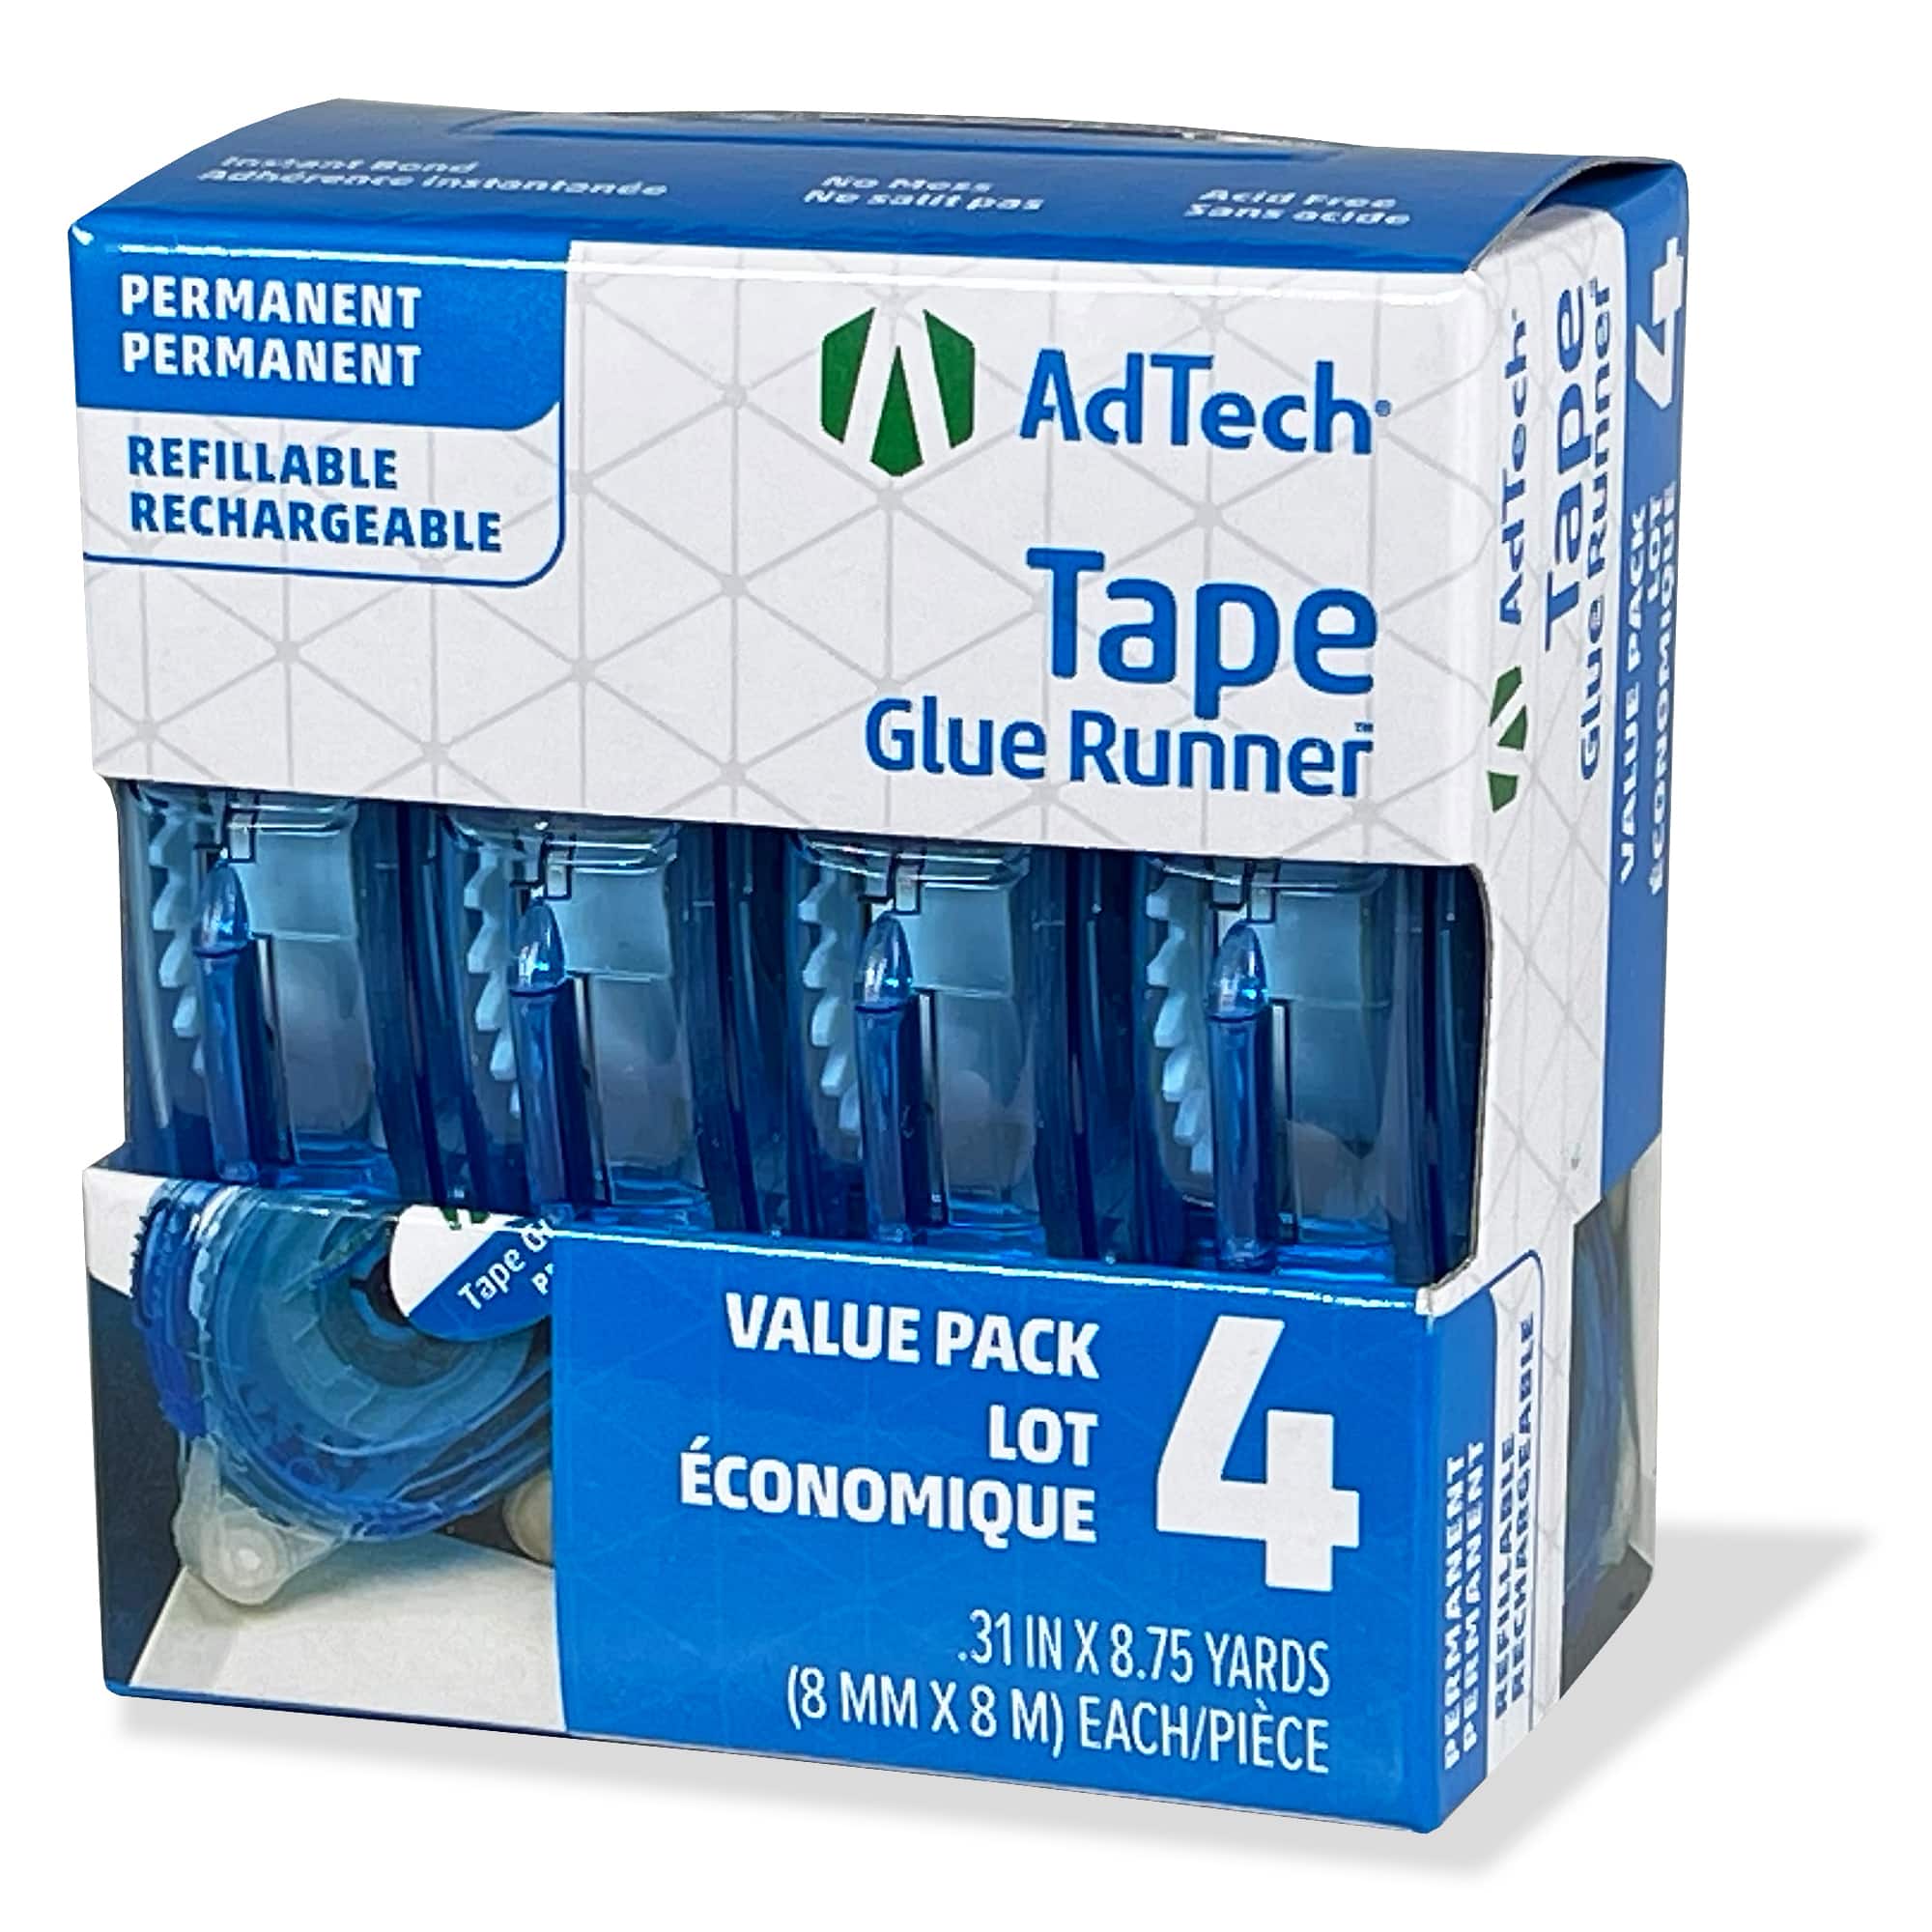 12 Packs: 4 ct. (48 total) AdTech&#x2122; Permanent Tape Glue Runners